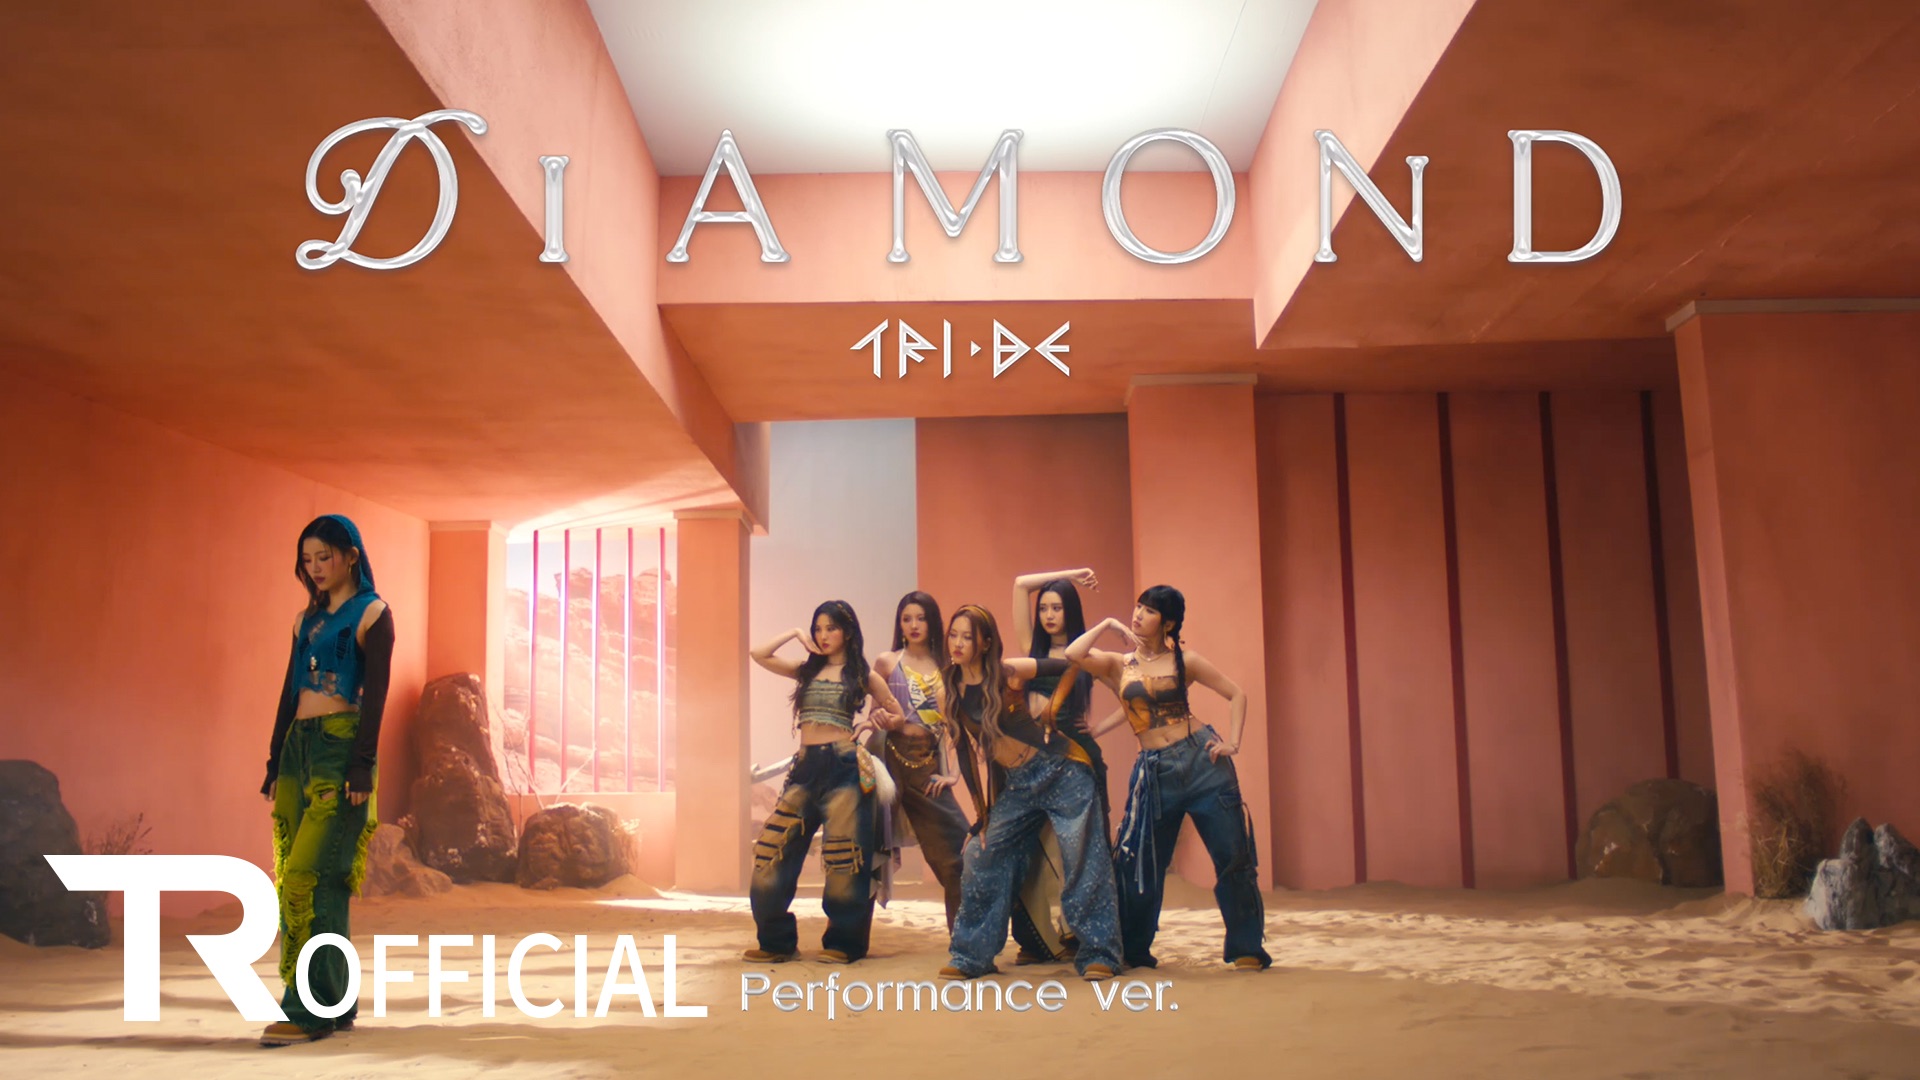 【TRI.BE】 'Diamond' Performance Video